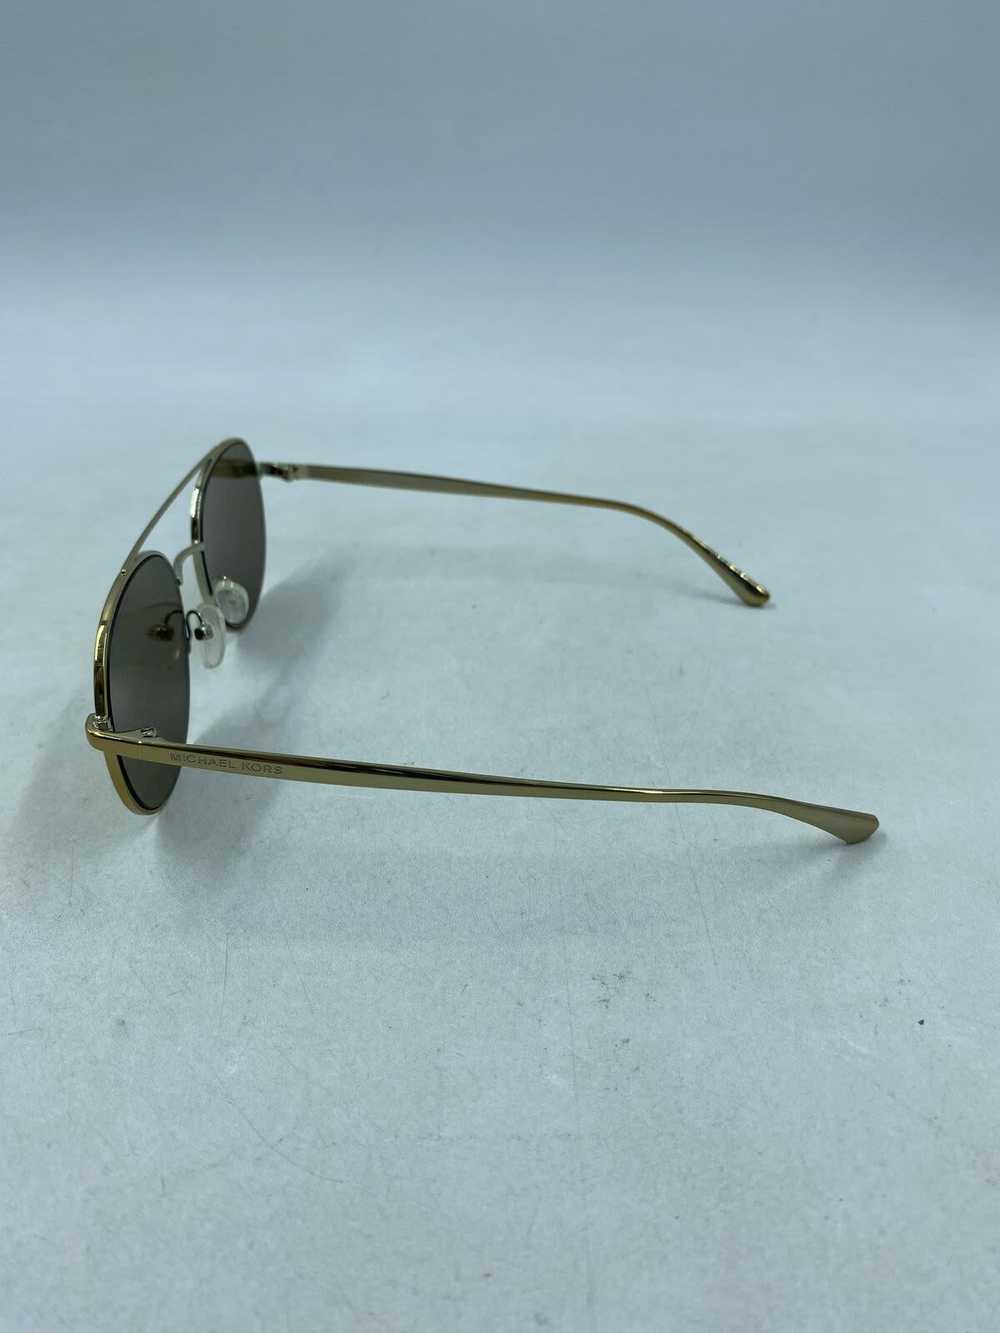 Michael Kors Gold Sunglasses - Size One Size - image 4